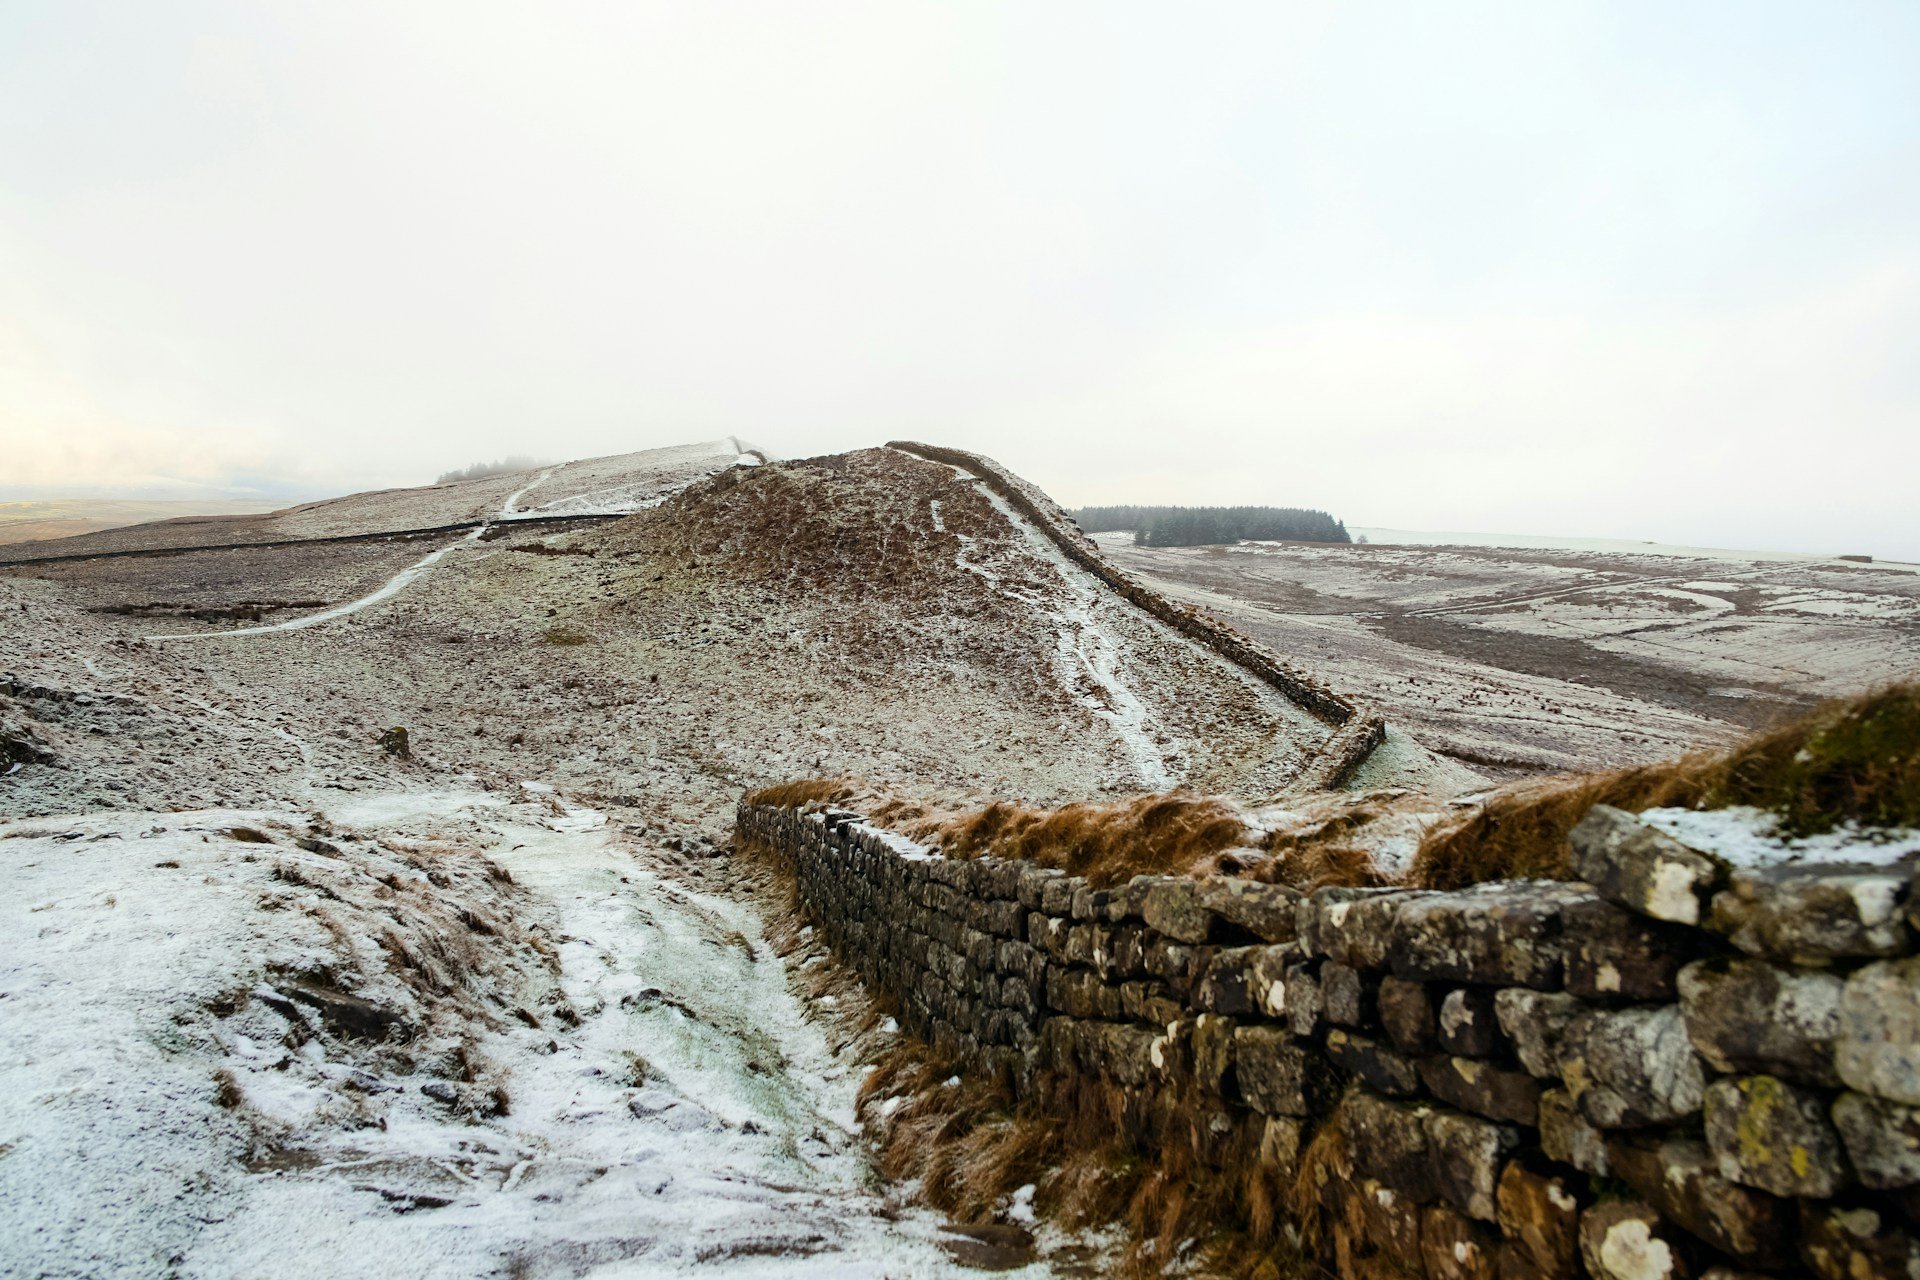 Hadrian’s Wall, Cumbria